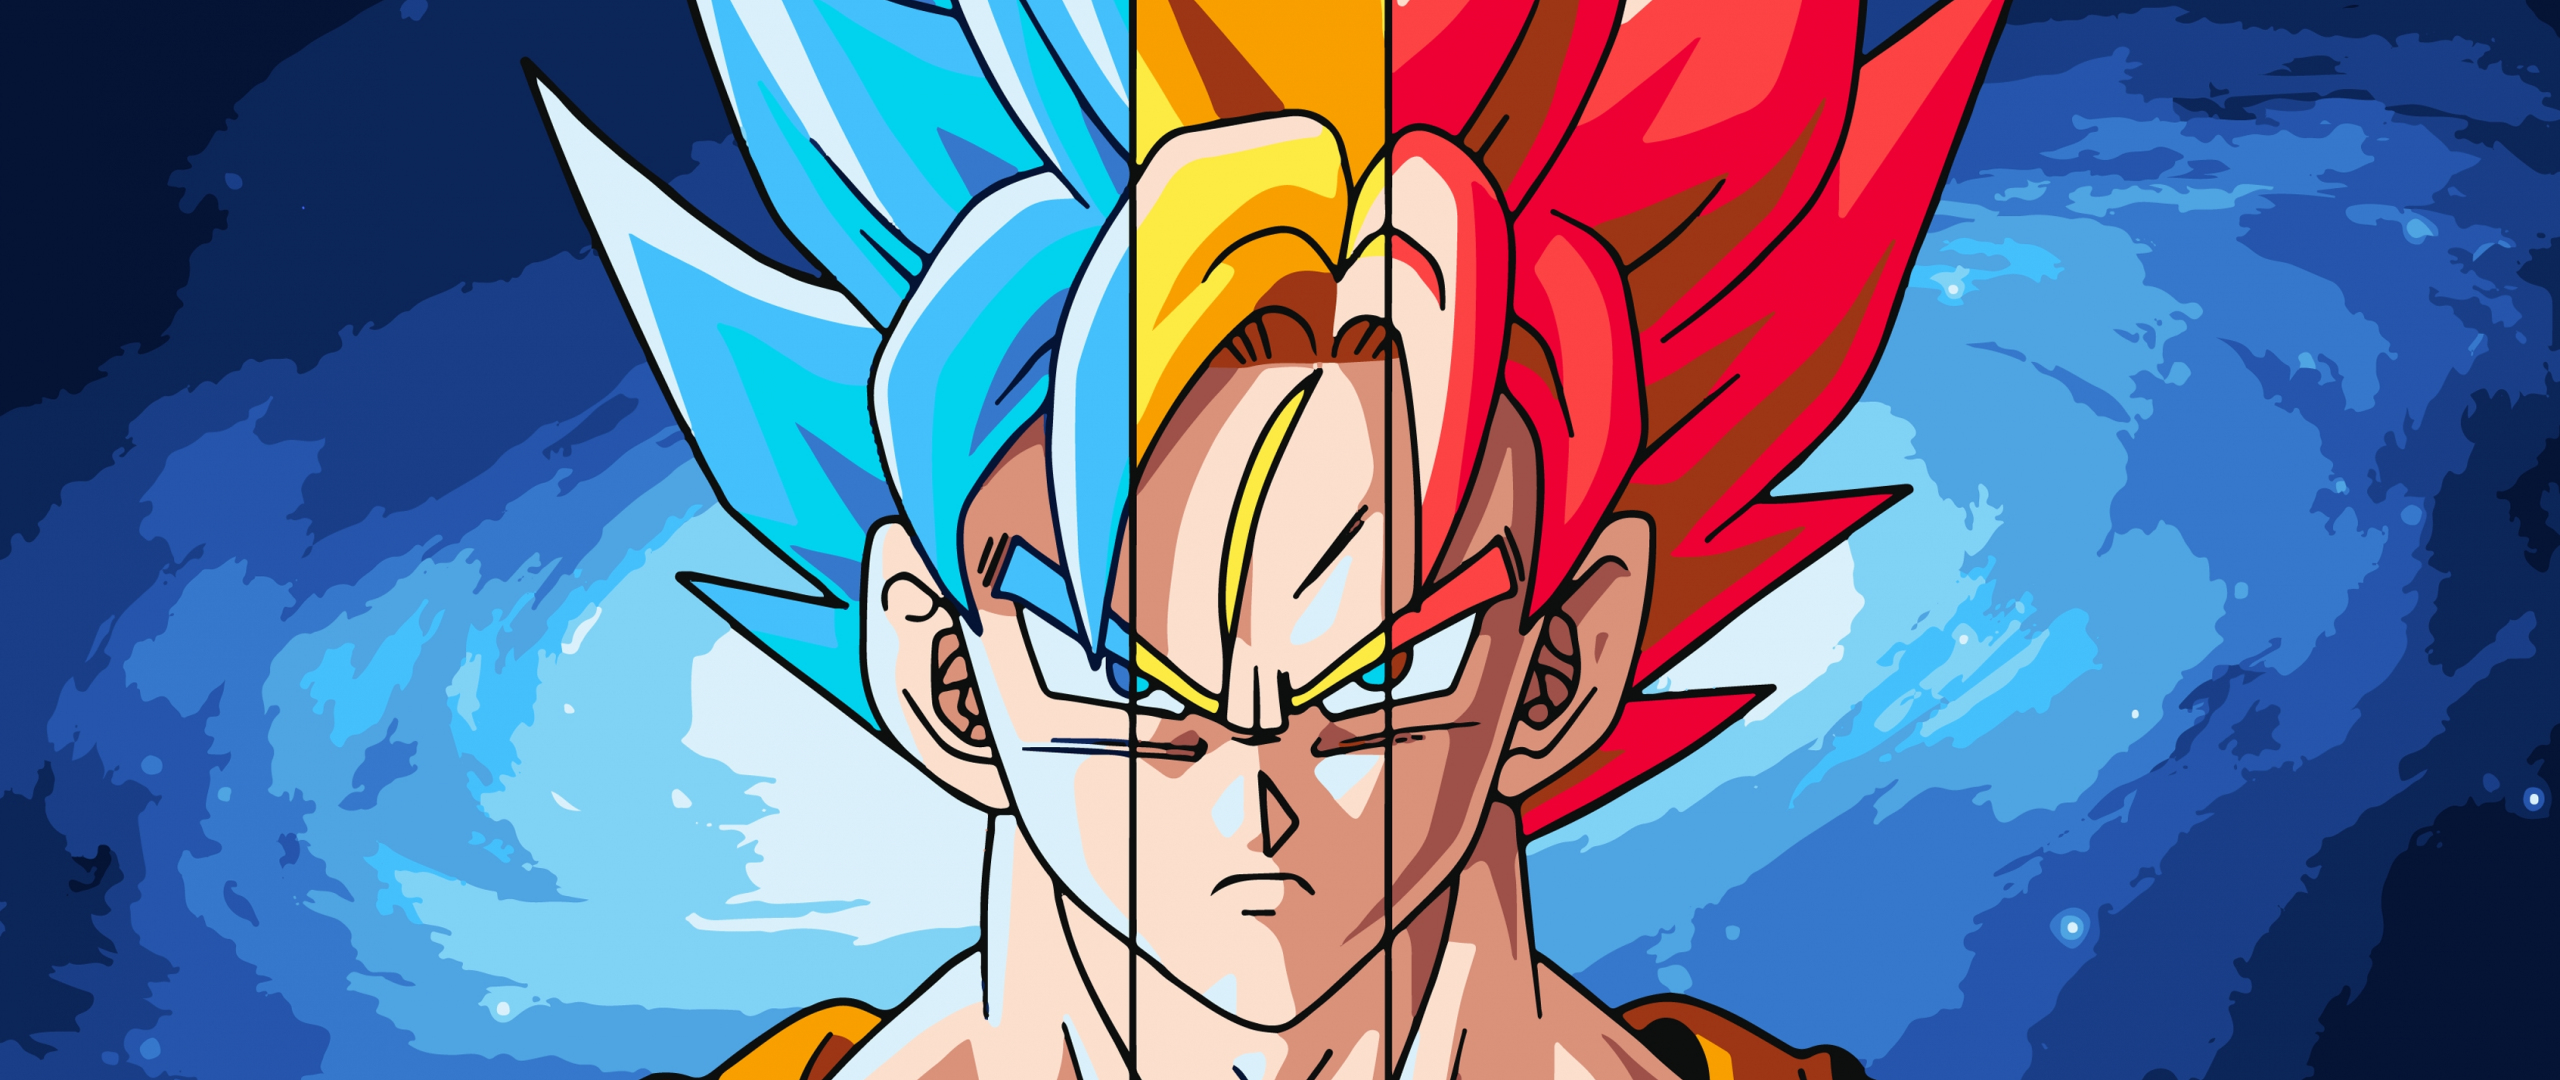 Desktop Wallpaper Goku Dragon Ball Super Sian Anime Hd Image Picture Background 2ifax